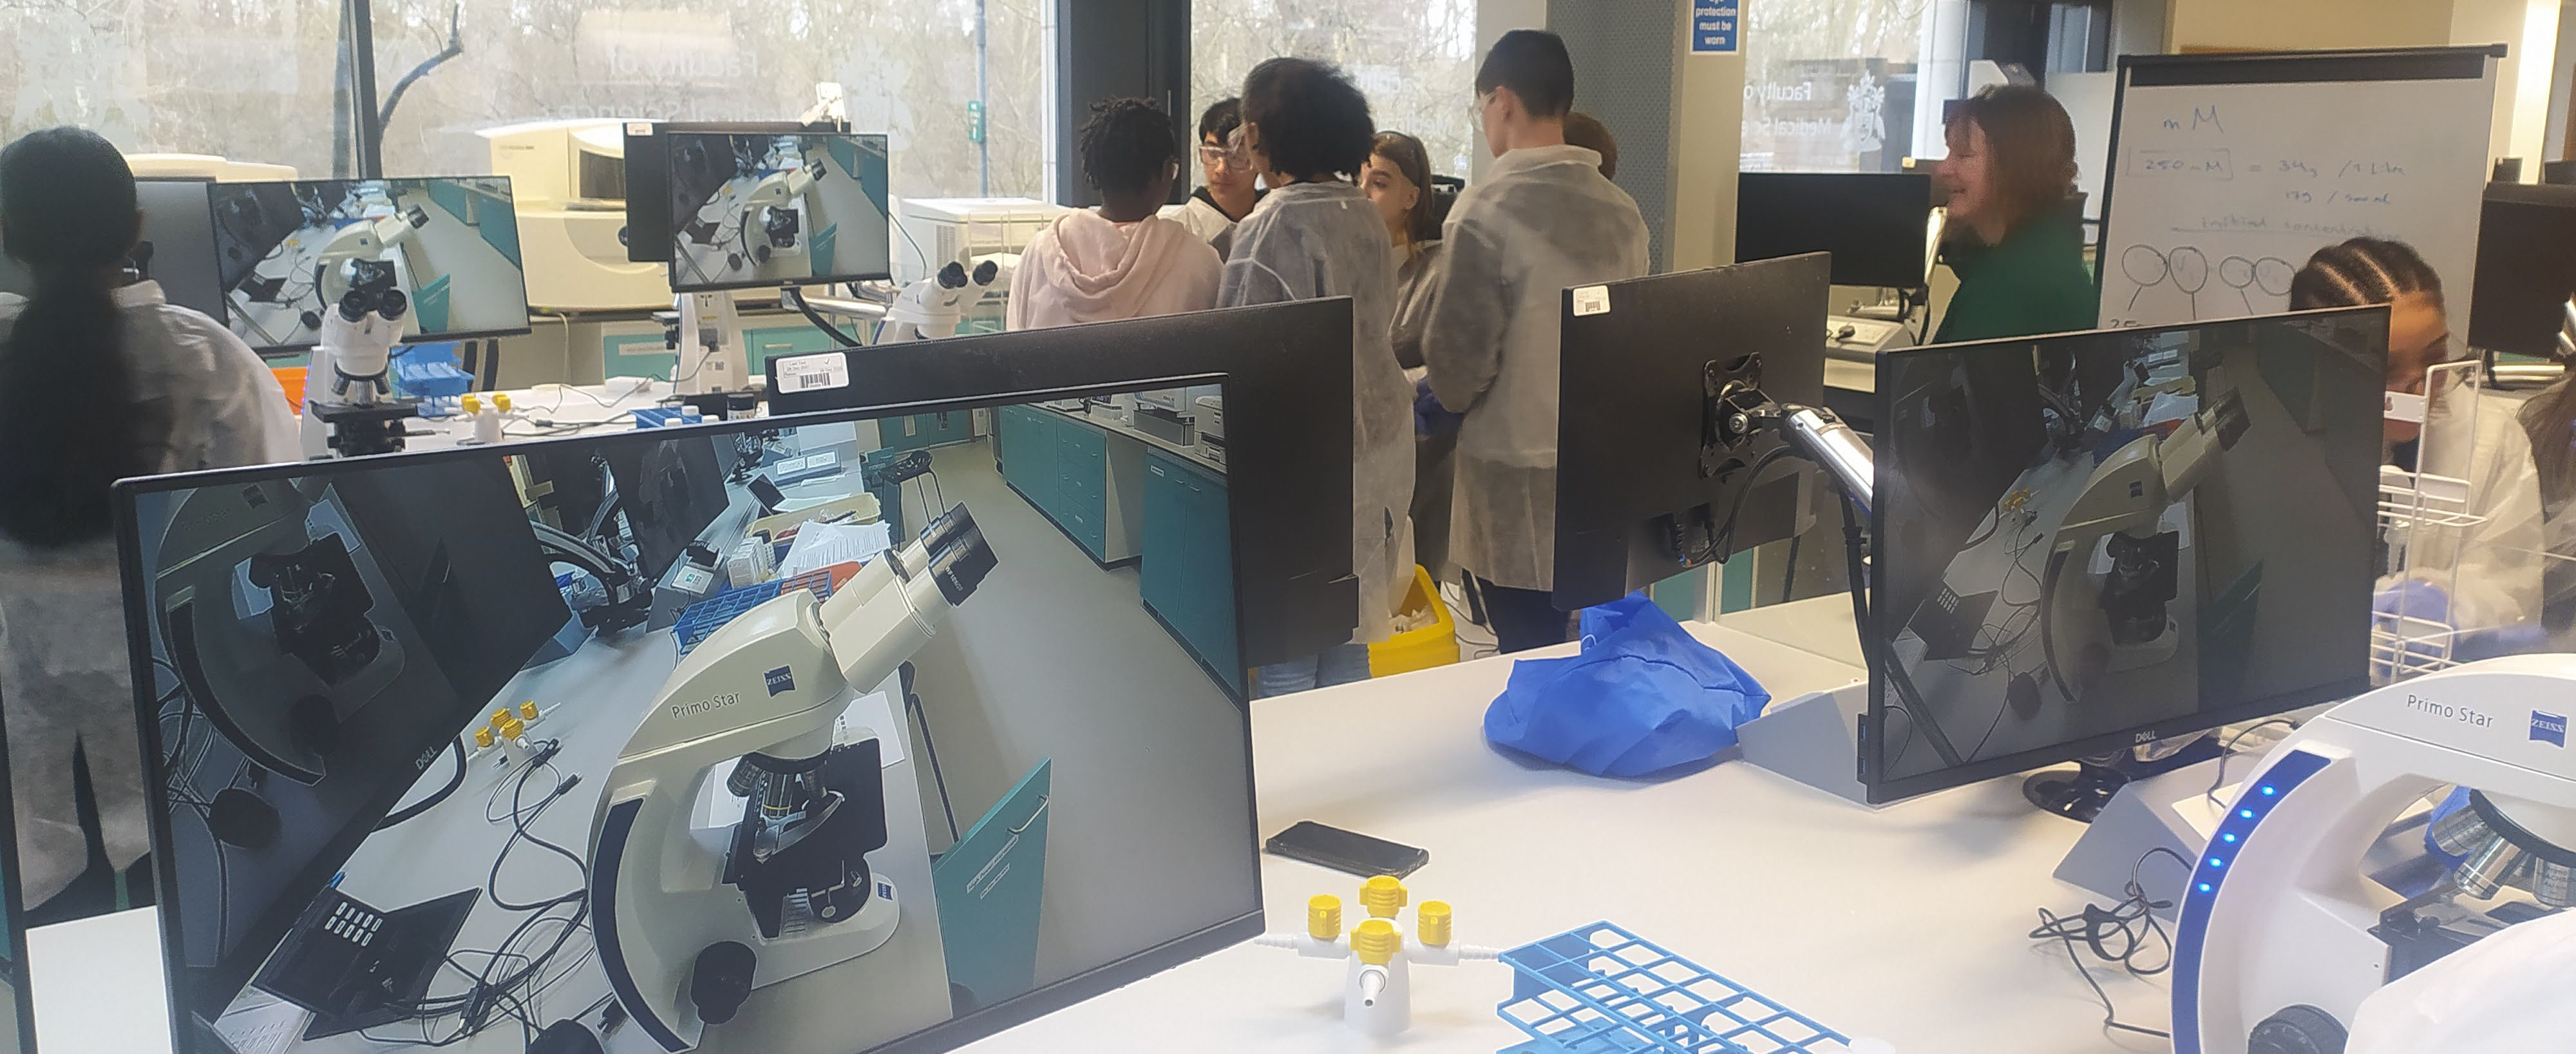 Students at the Saturday Club using microscopes